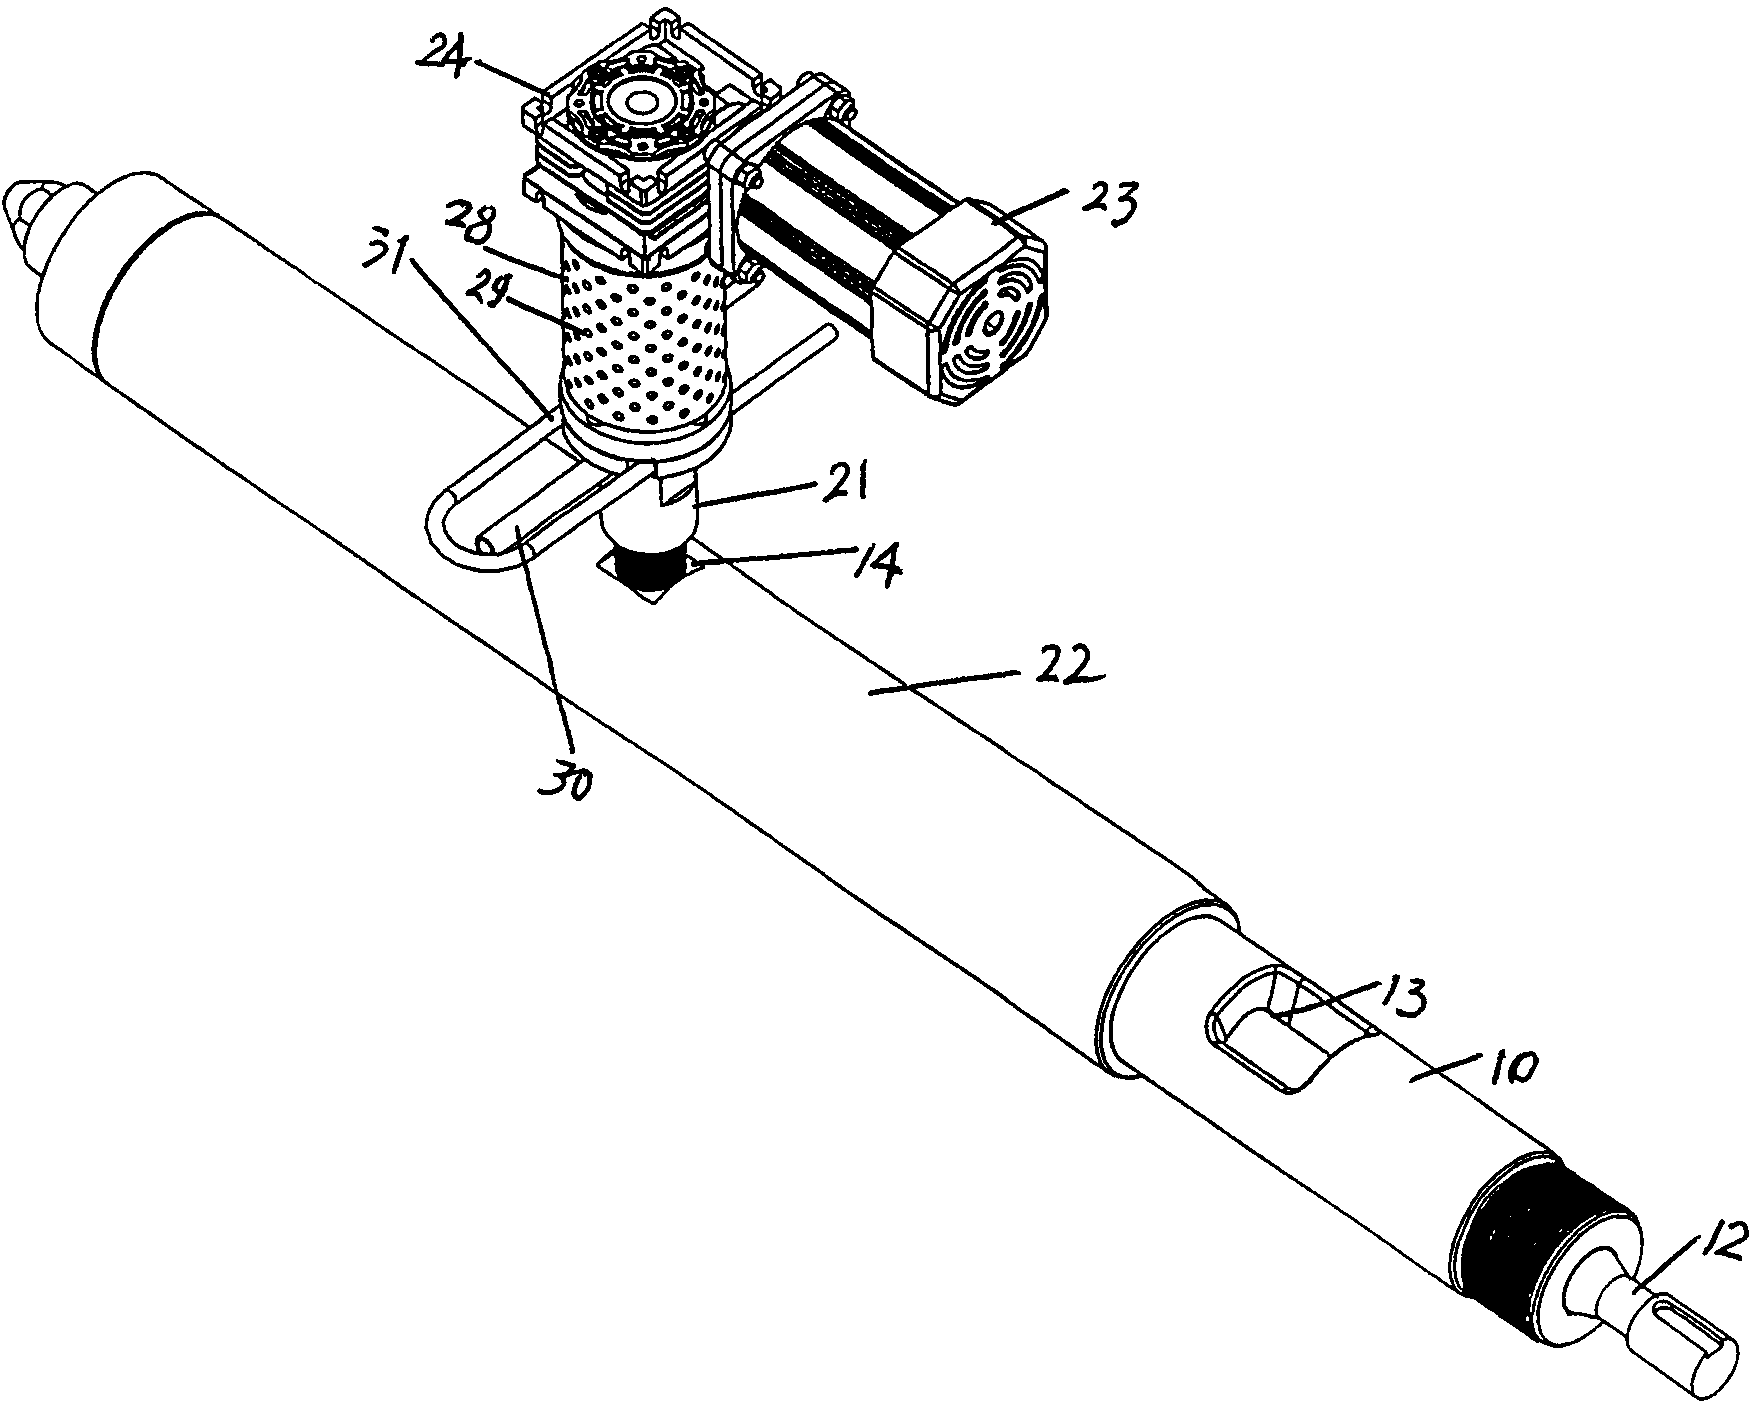 Vacuum-exhausting-type screw barrel